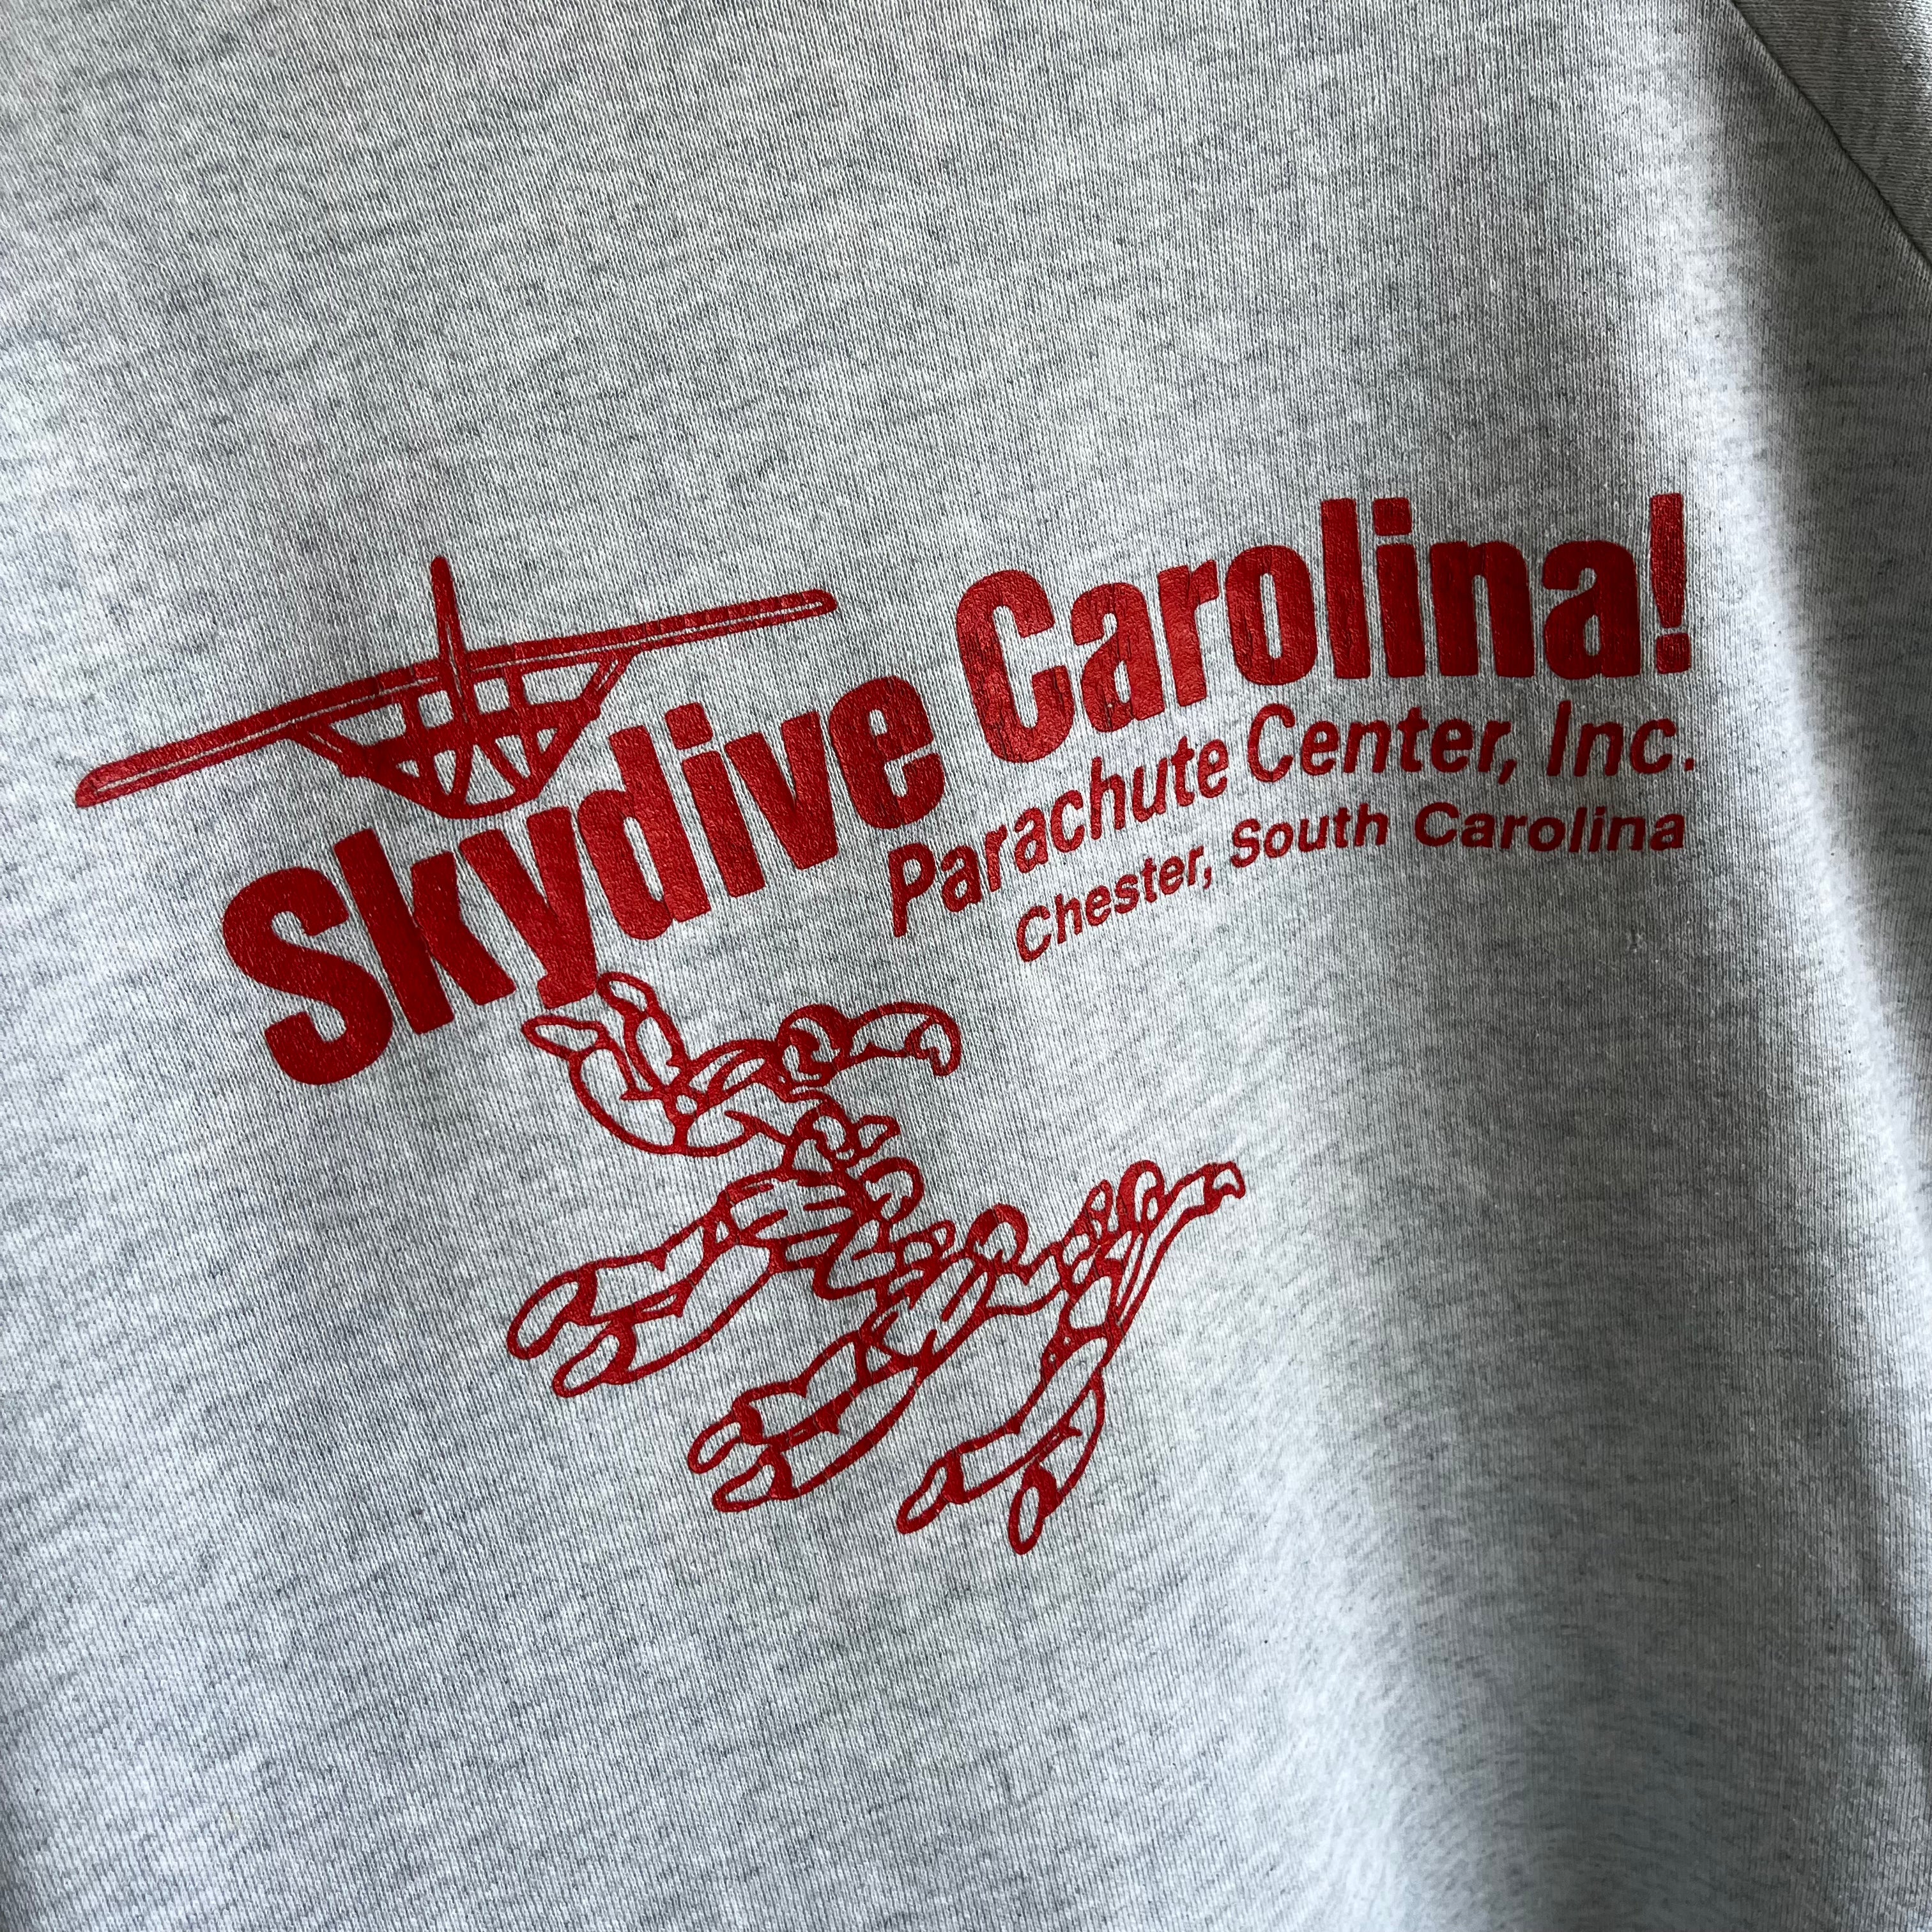 1980s Skydive Carolina Sweatshirt